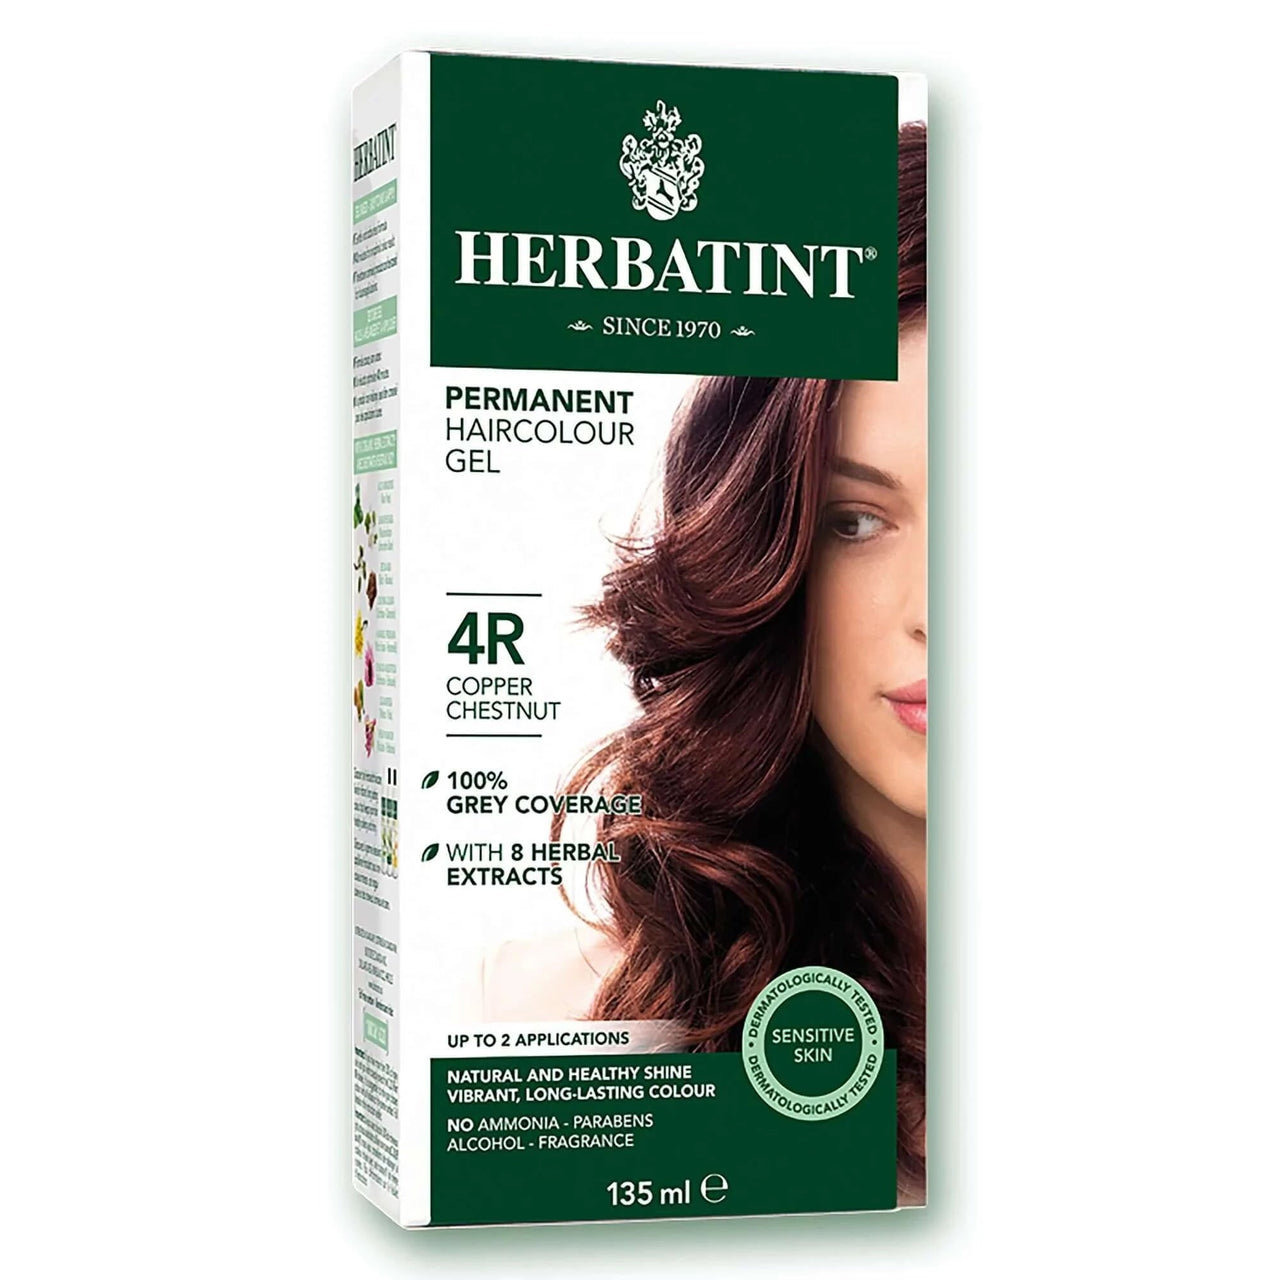 Herbatint 4R Copper Chestnut Permanent Haircolour Gel 135mL - Nutrition Plus